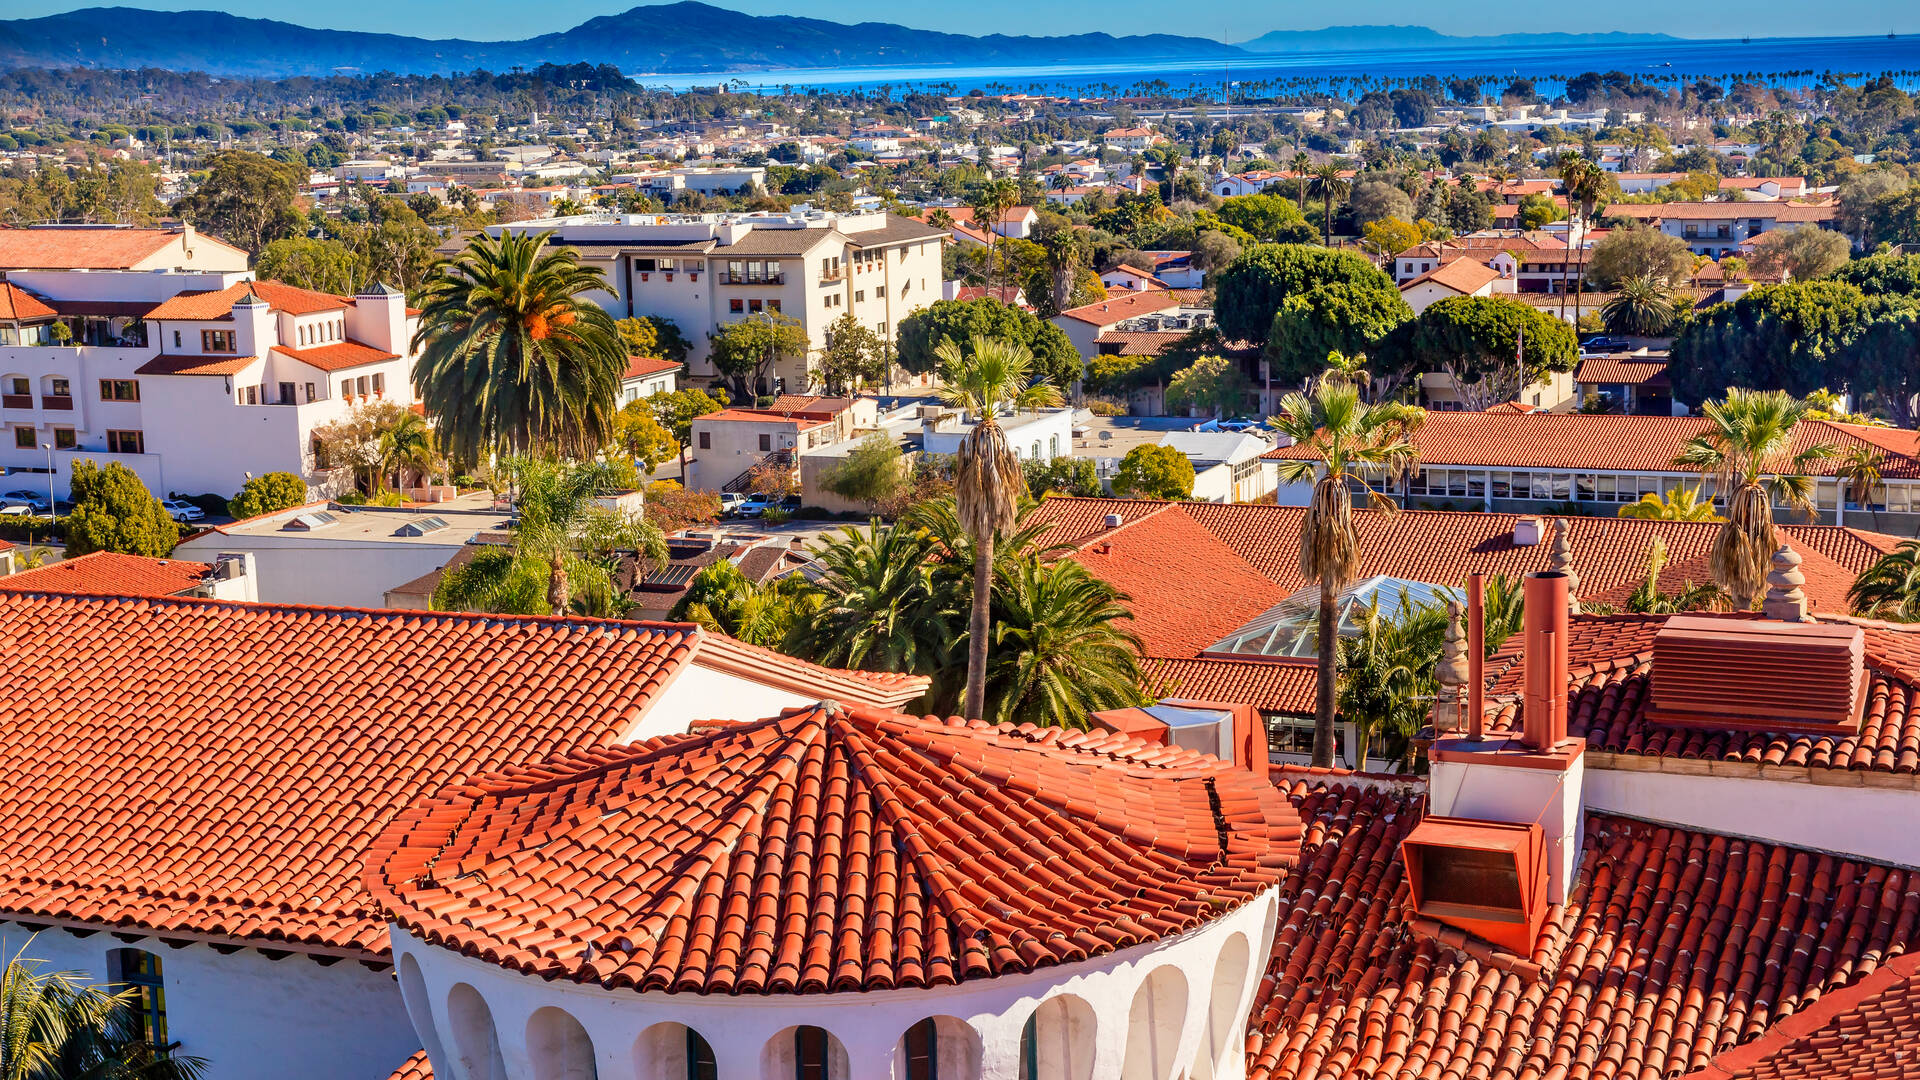 Santa Barbara Reisen und Billigflug – USA – Hotels und Flug nach Santa Barbara